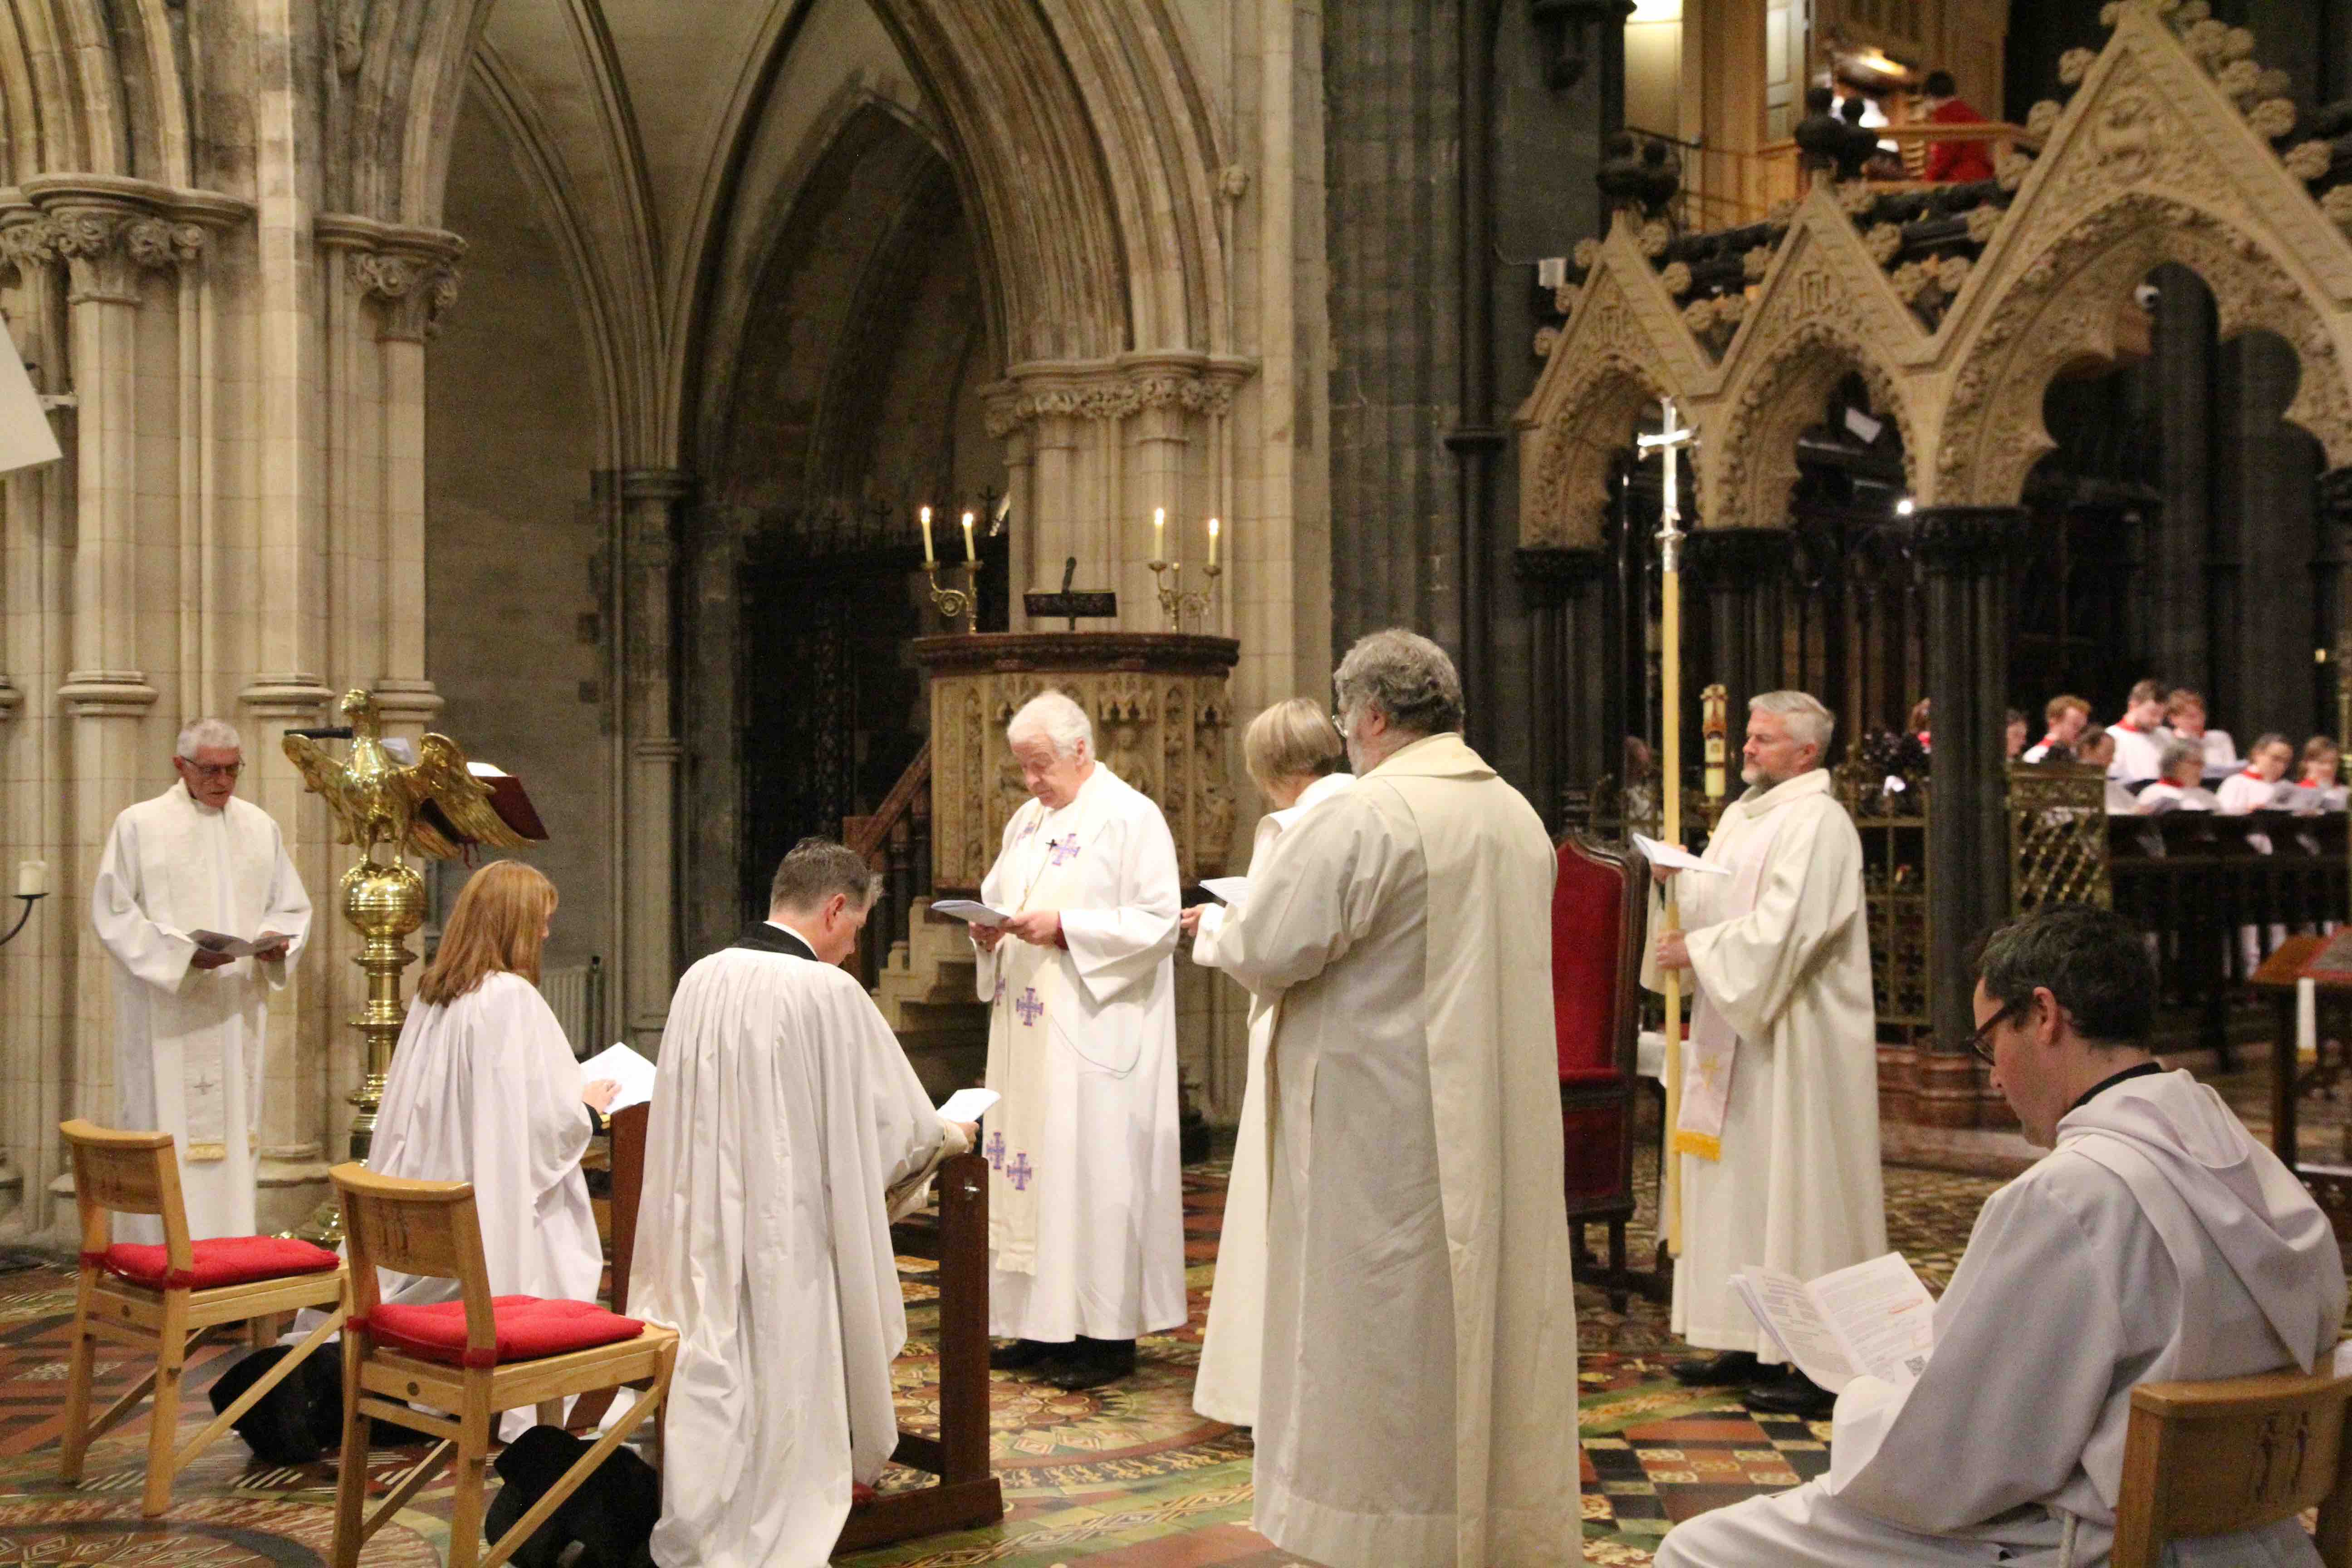 The ordination to the diaconate of the Revd Caroline Brennan and the Revd Mathew McCauley.